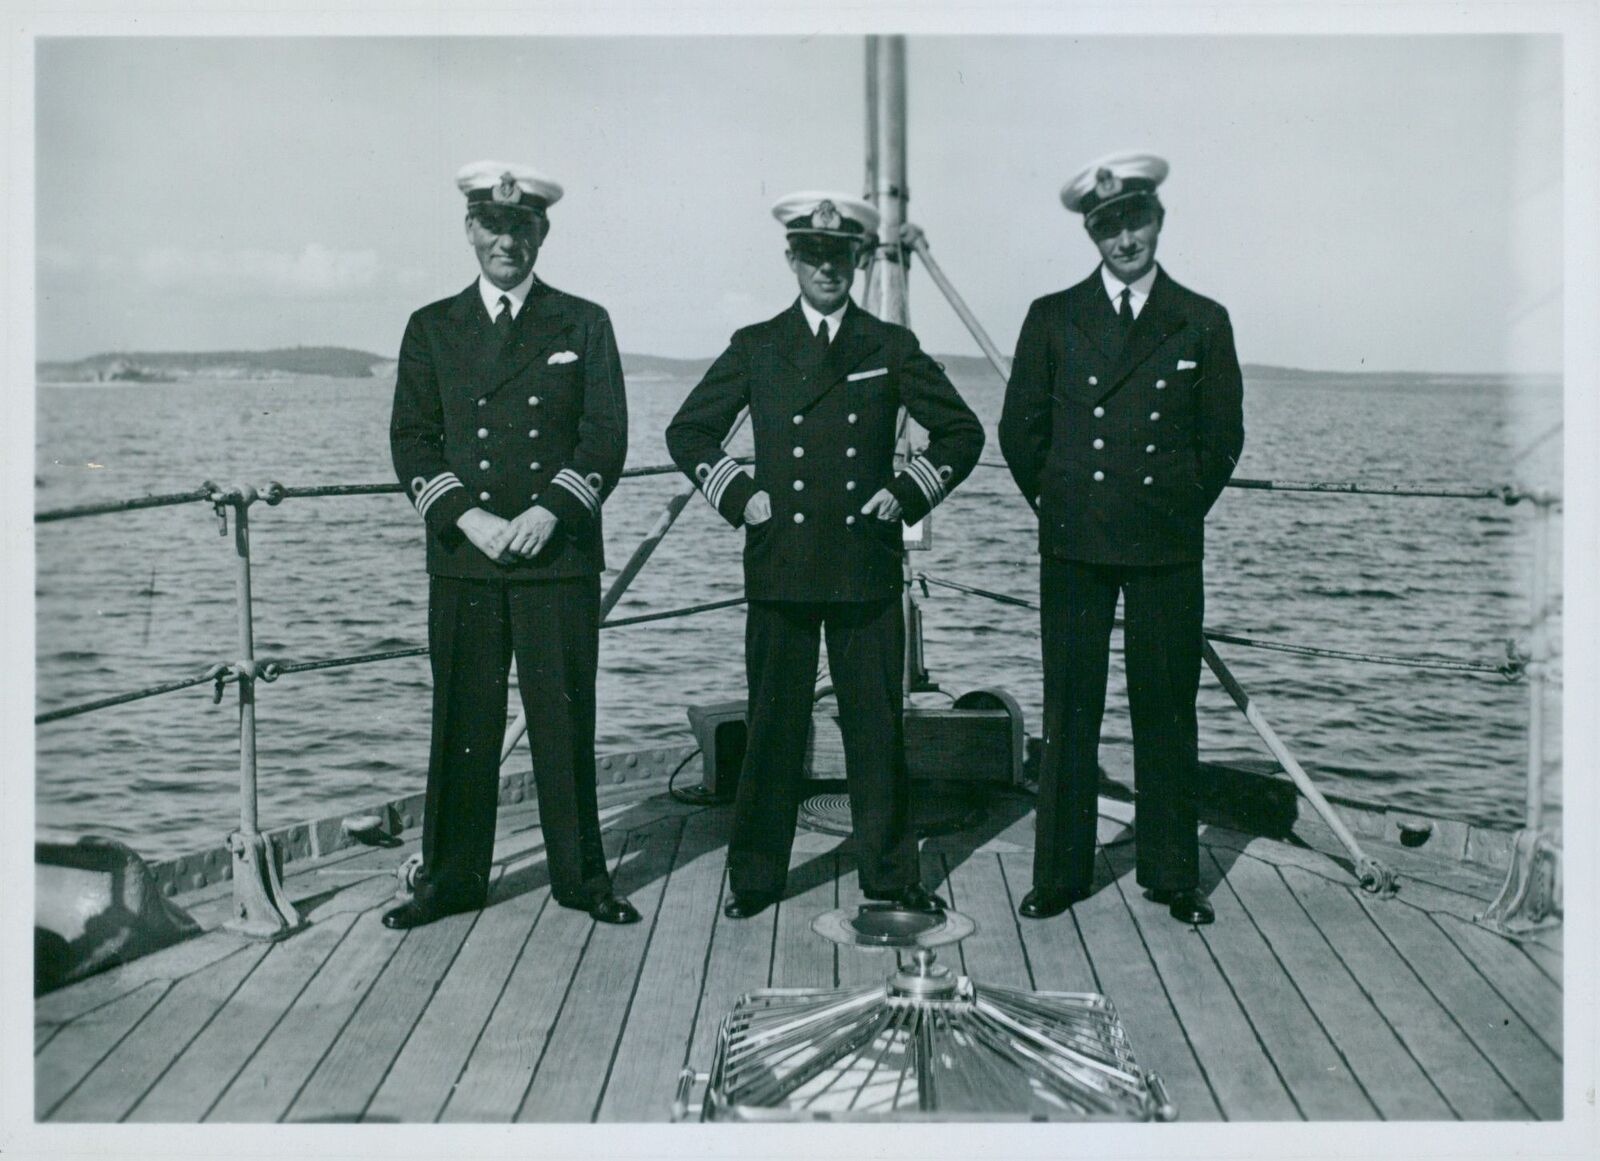 Captain Hamilton, Captain Palmgren board - Year... - Vintage Photograph 559845